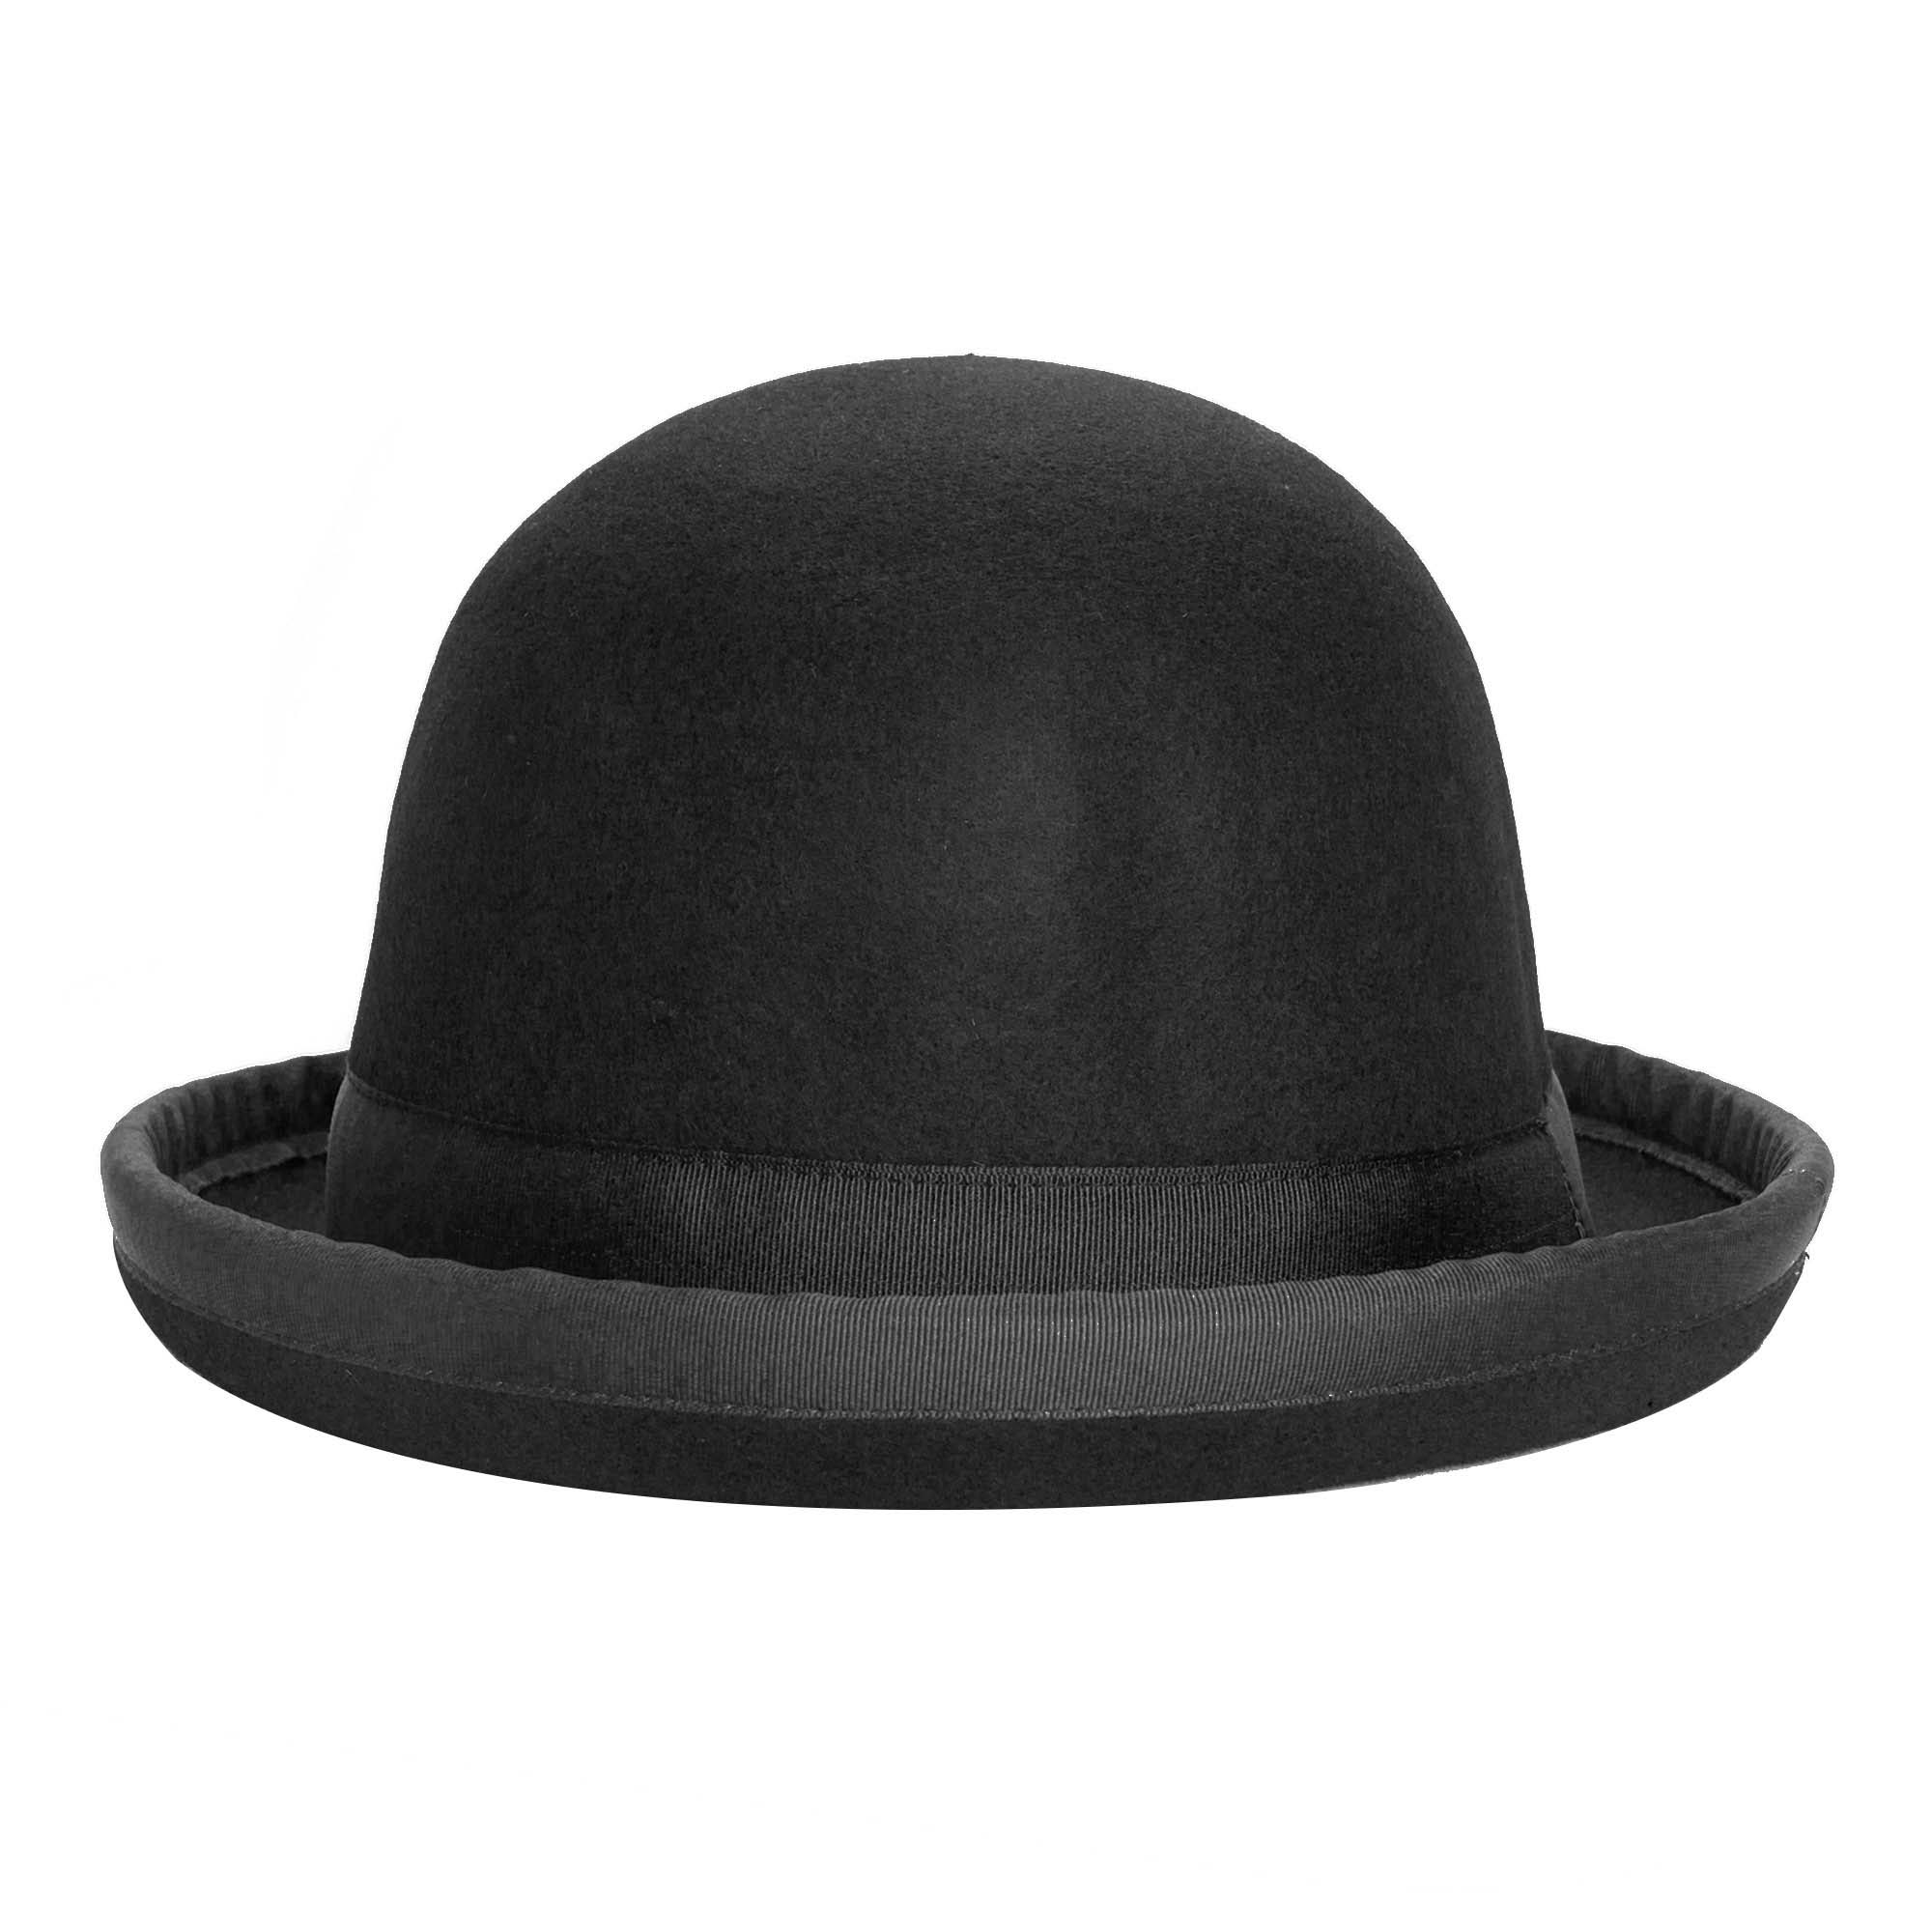 black hat side view